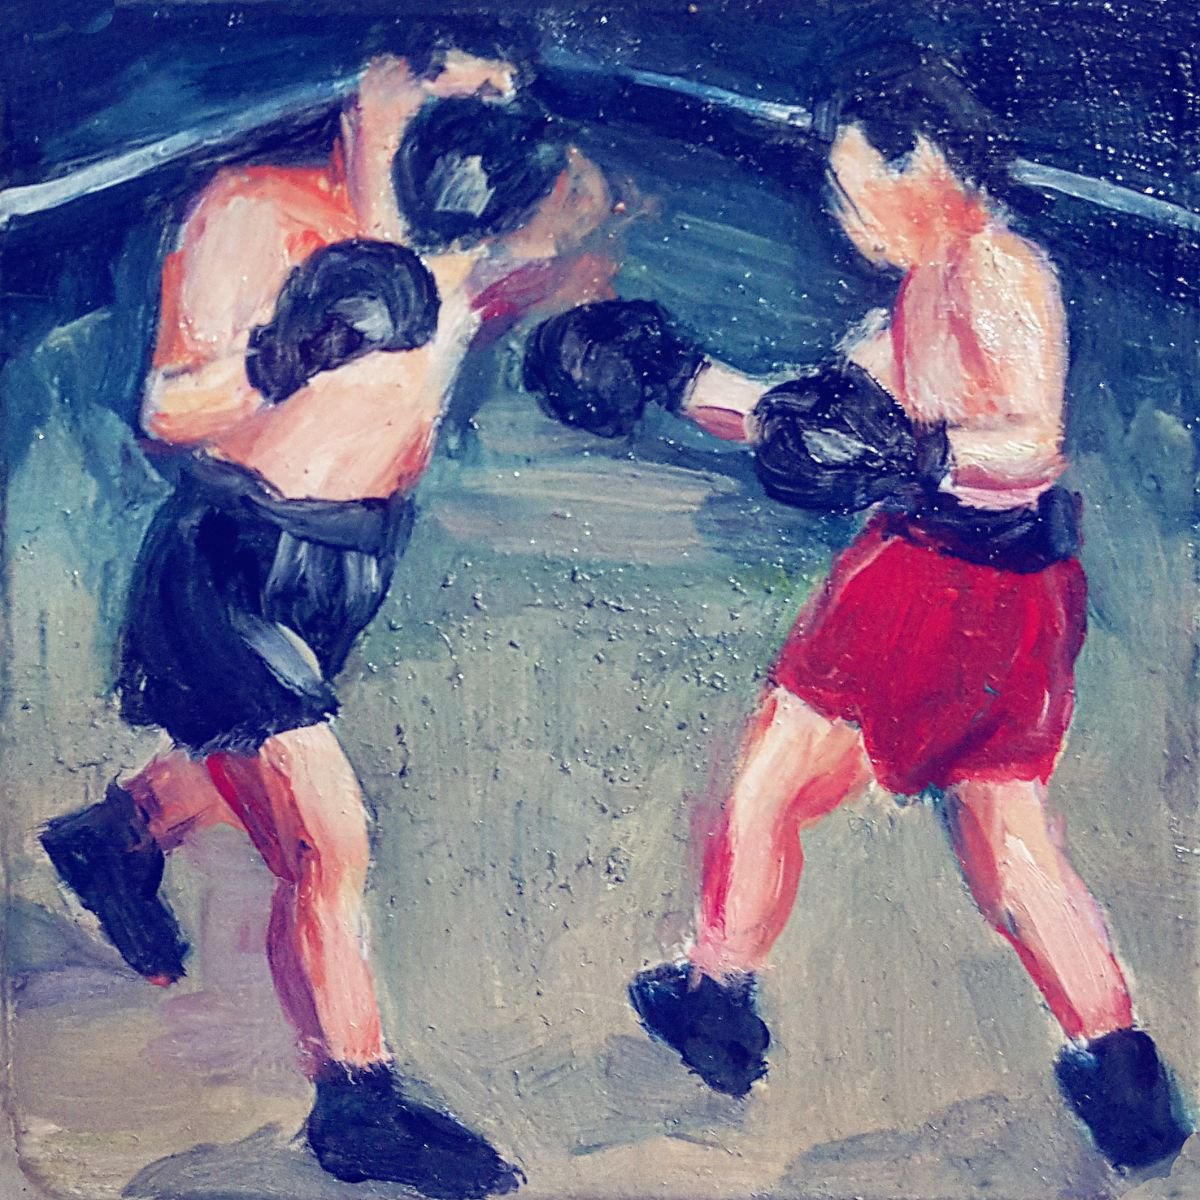 Fighter No.2 by Samantha Han